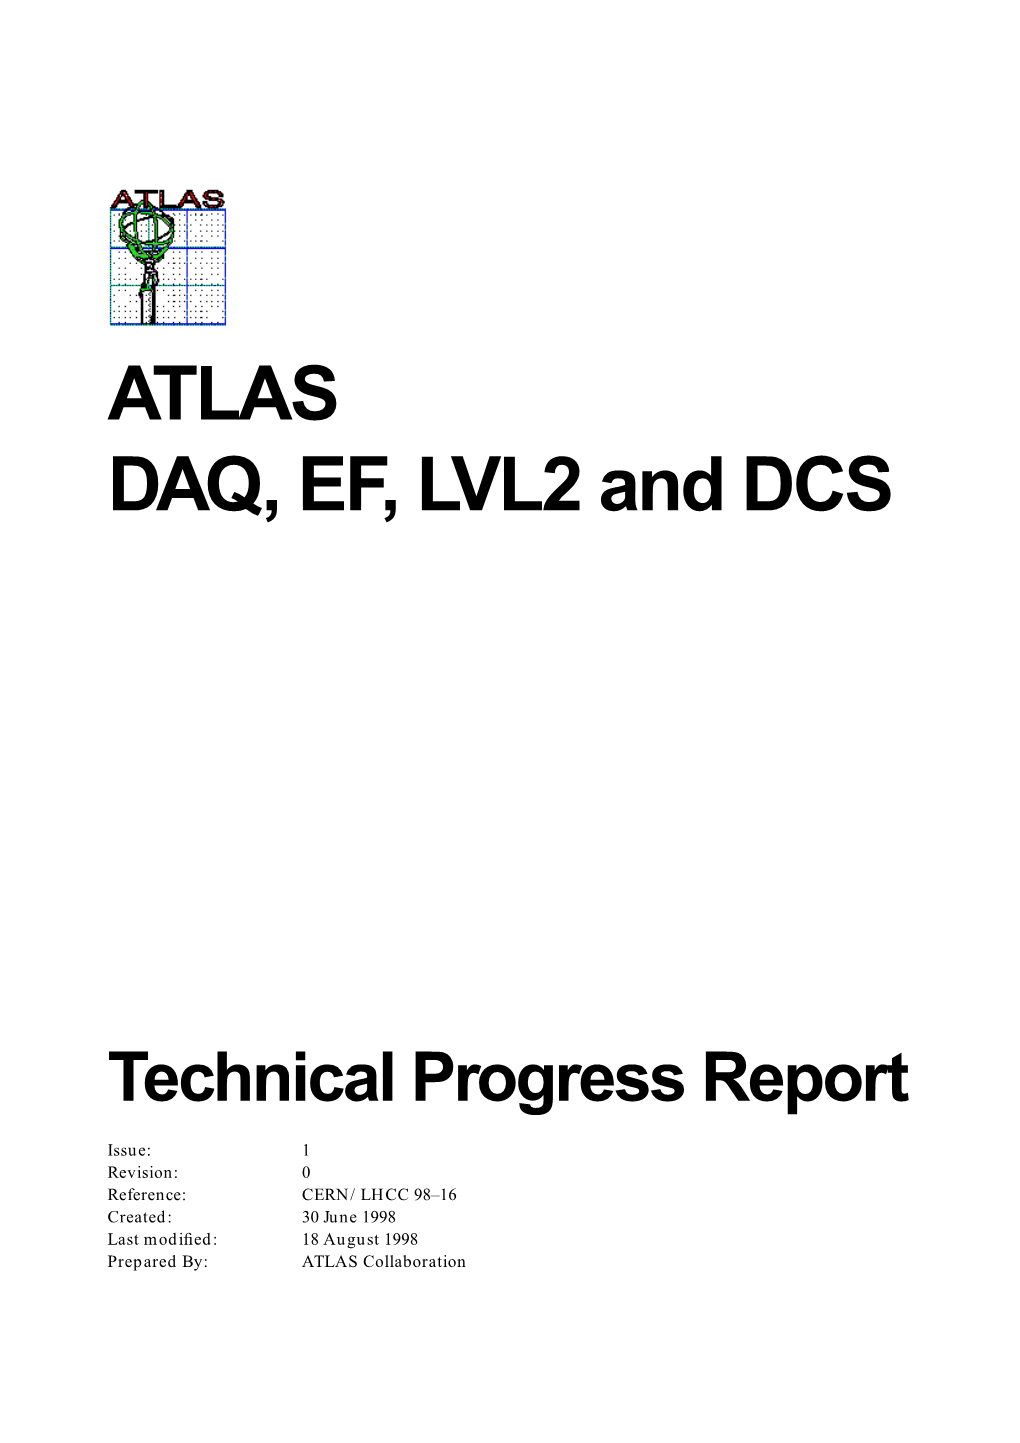 ATLAS DAQ, EF, LVL2 and DCS